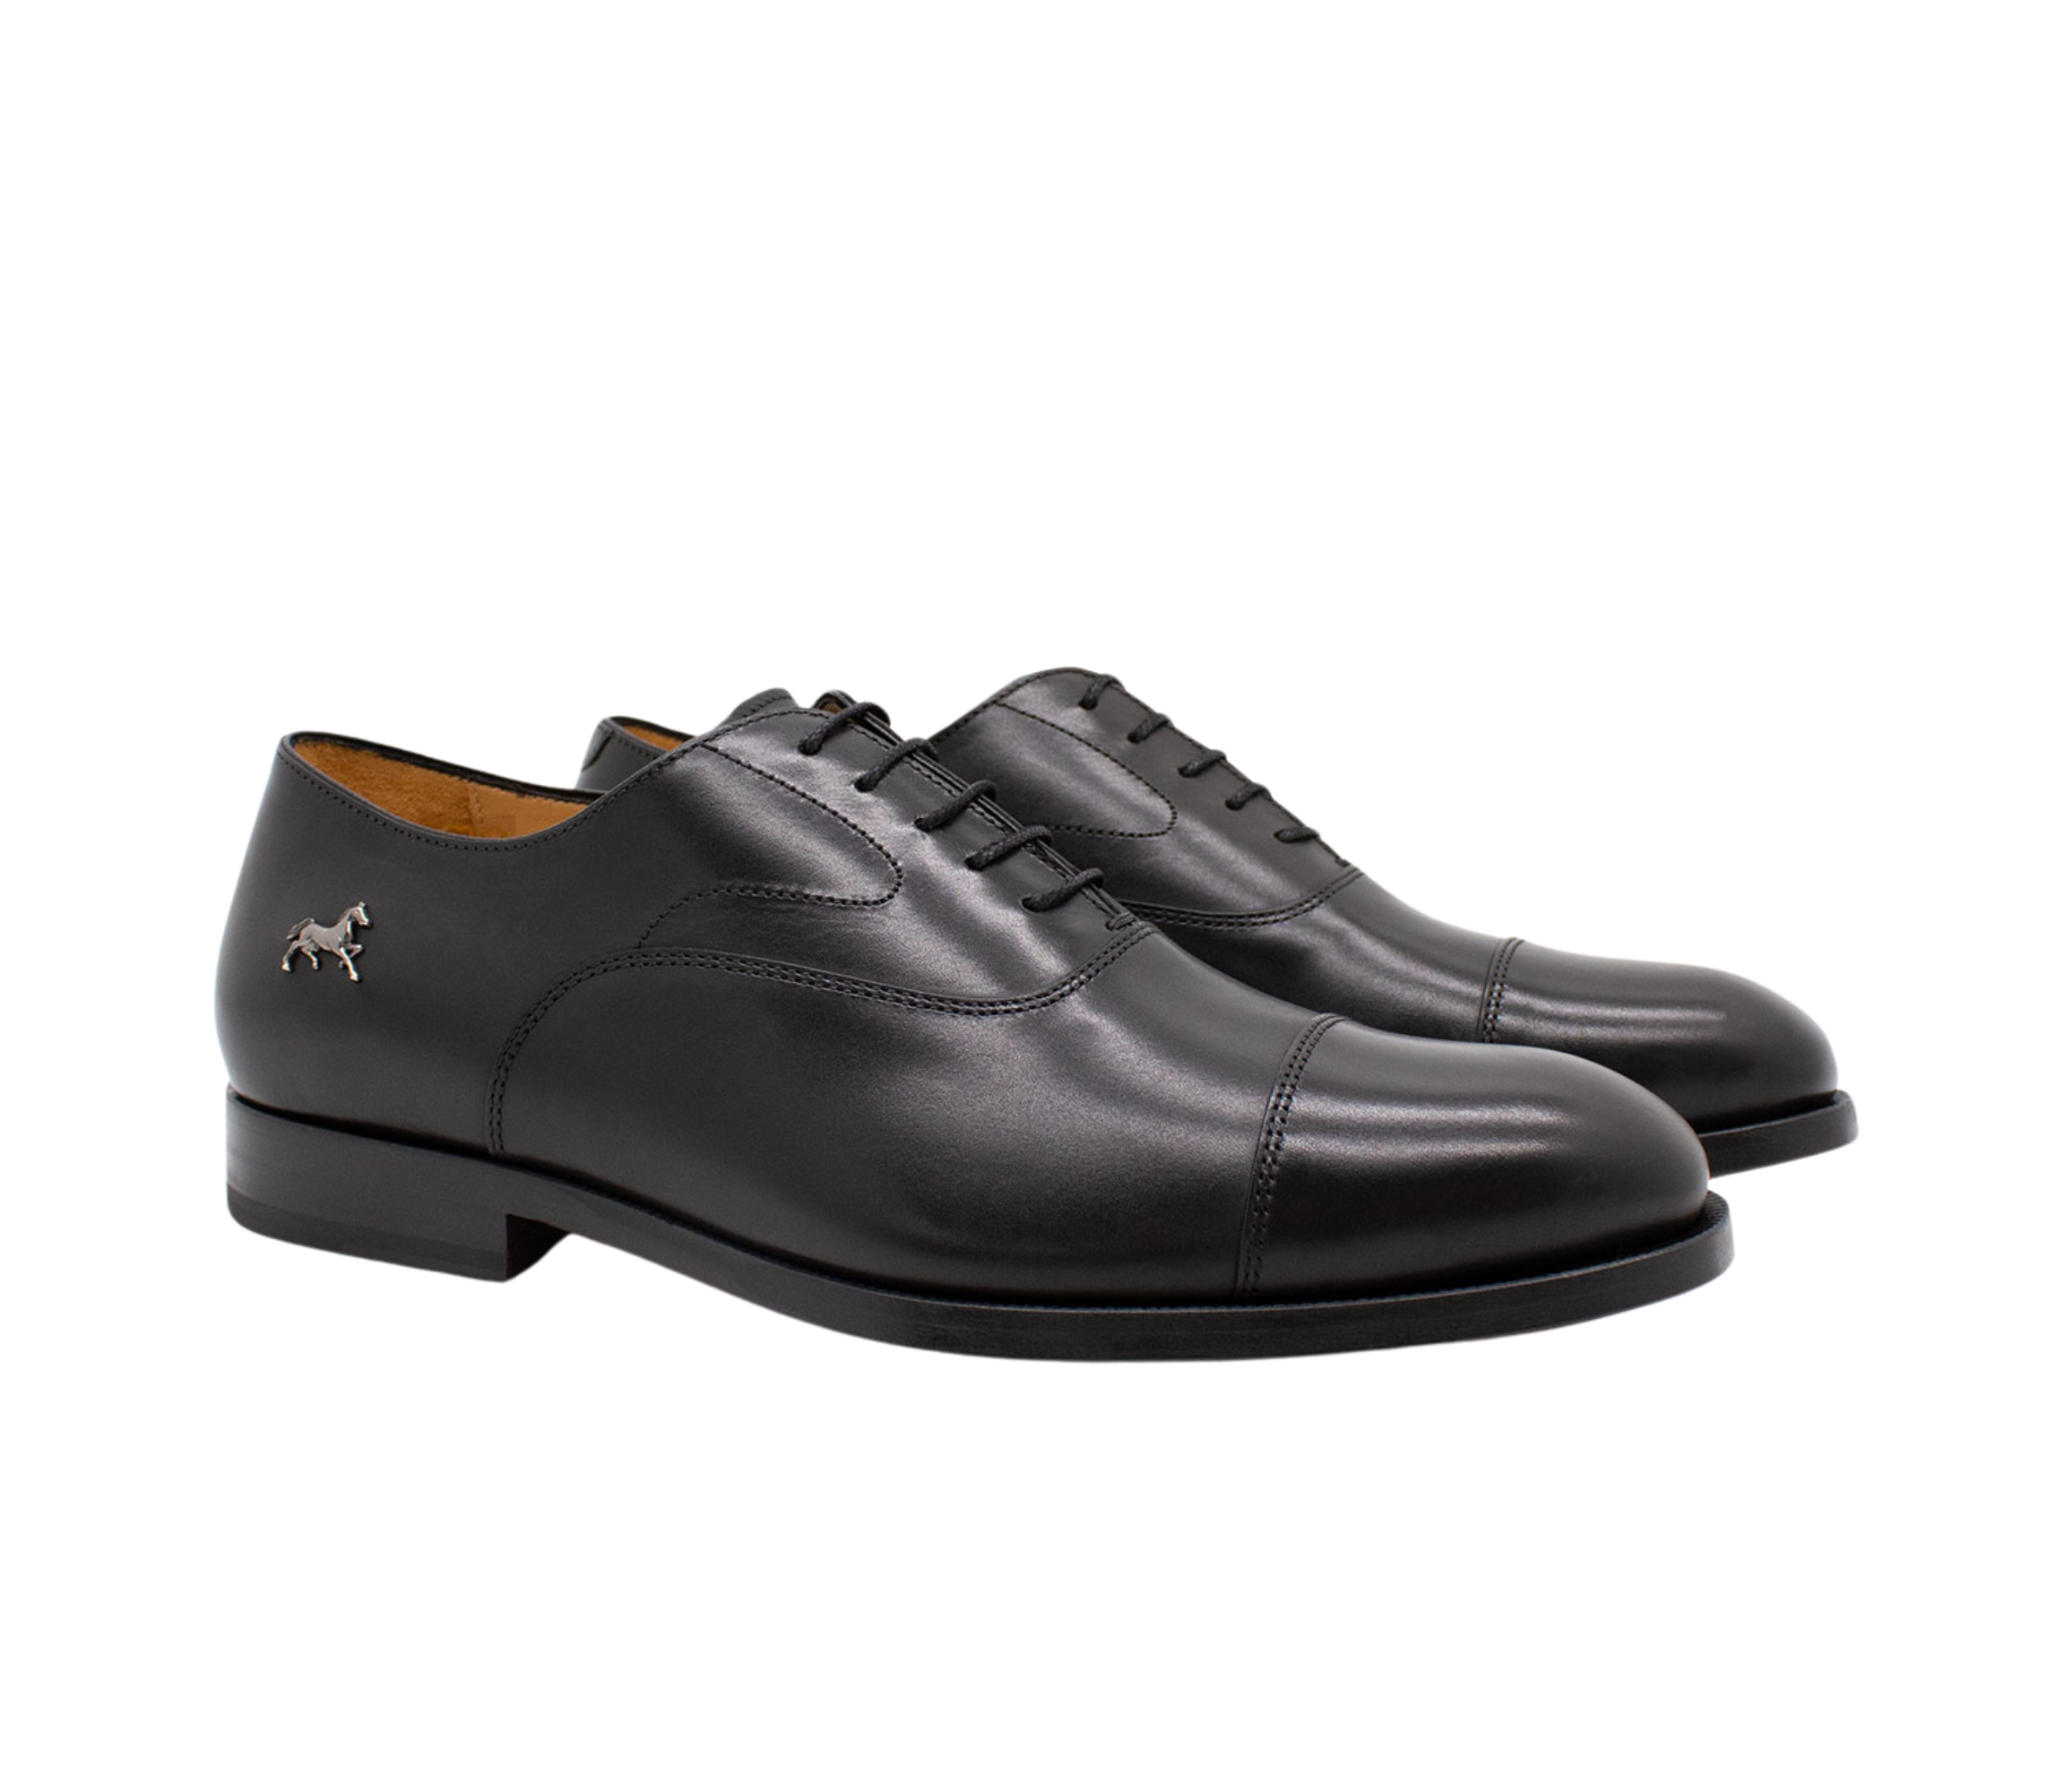 Cavalinho Cavalo Lusitano Leather Toe Cap Oxford Shoes - 48060201.01_P02 #color_